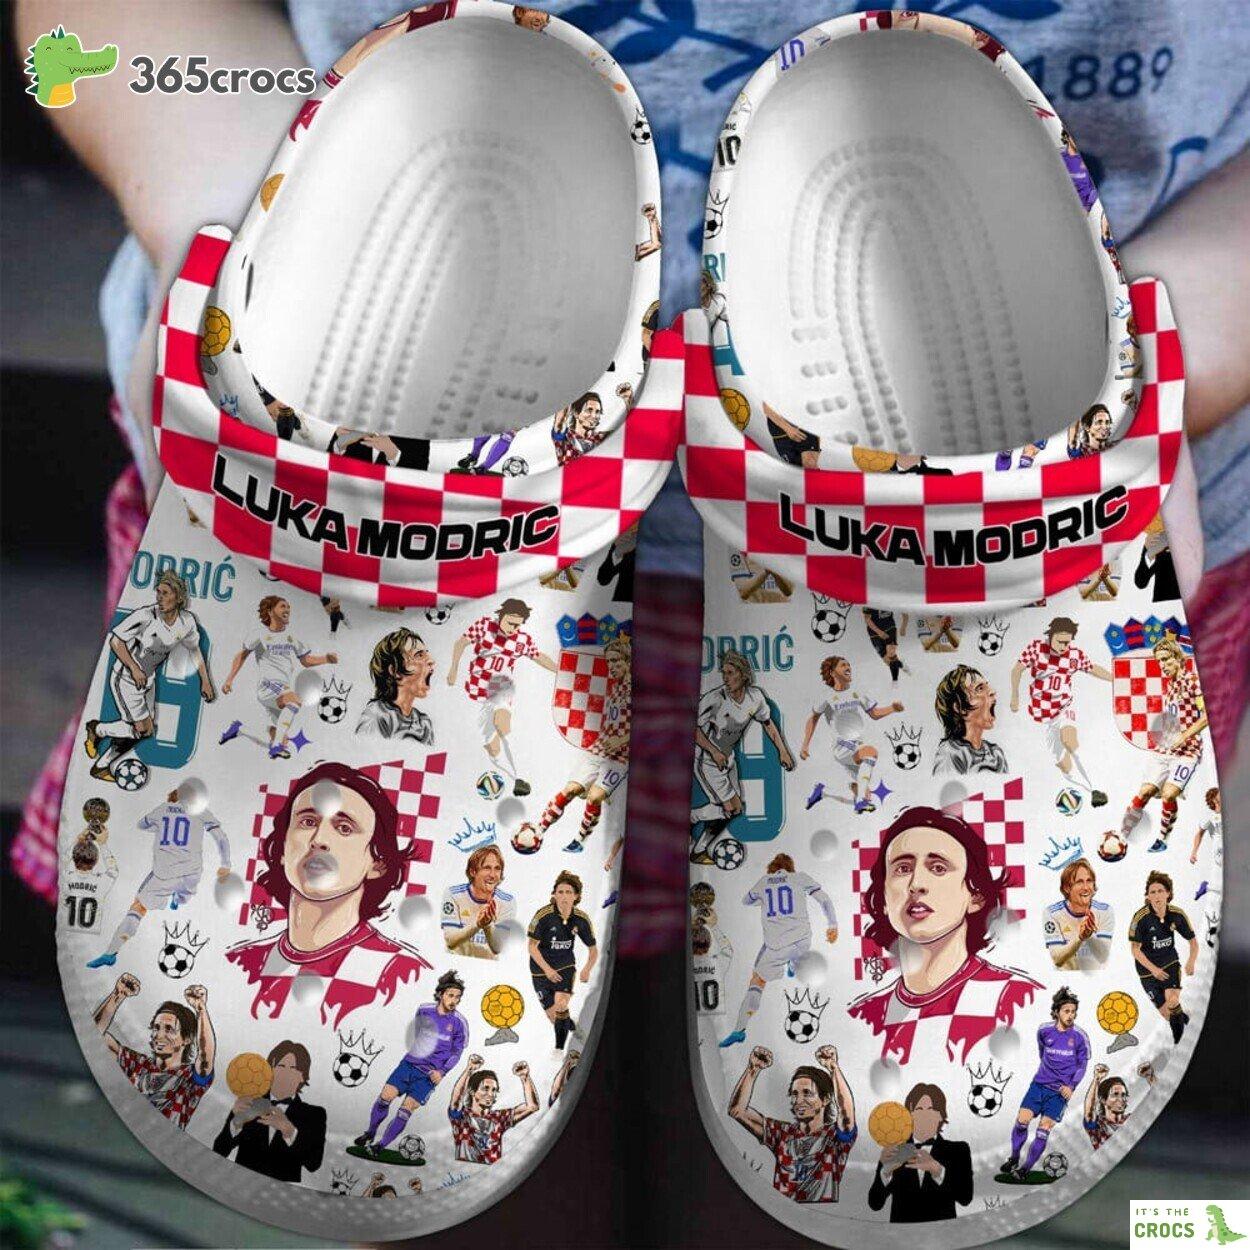 Luka Modric Football Soccer Premium Crocs Clogs Shoes Comfortable